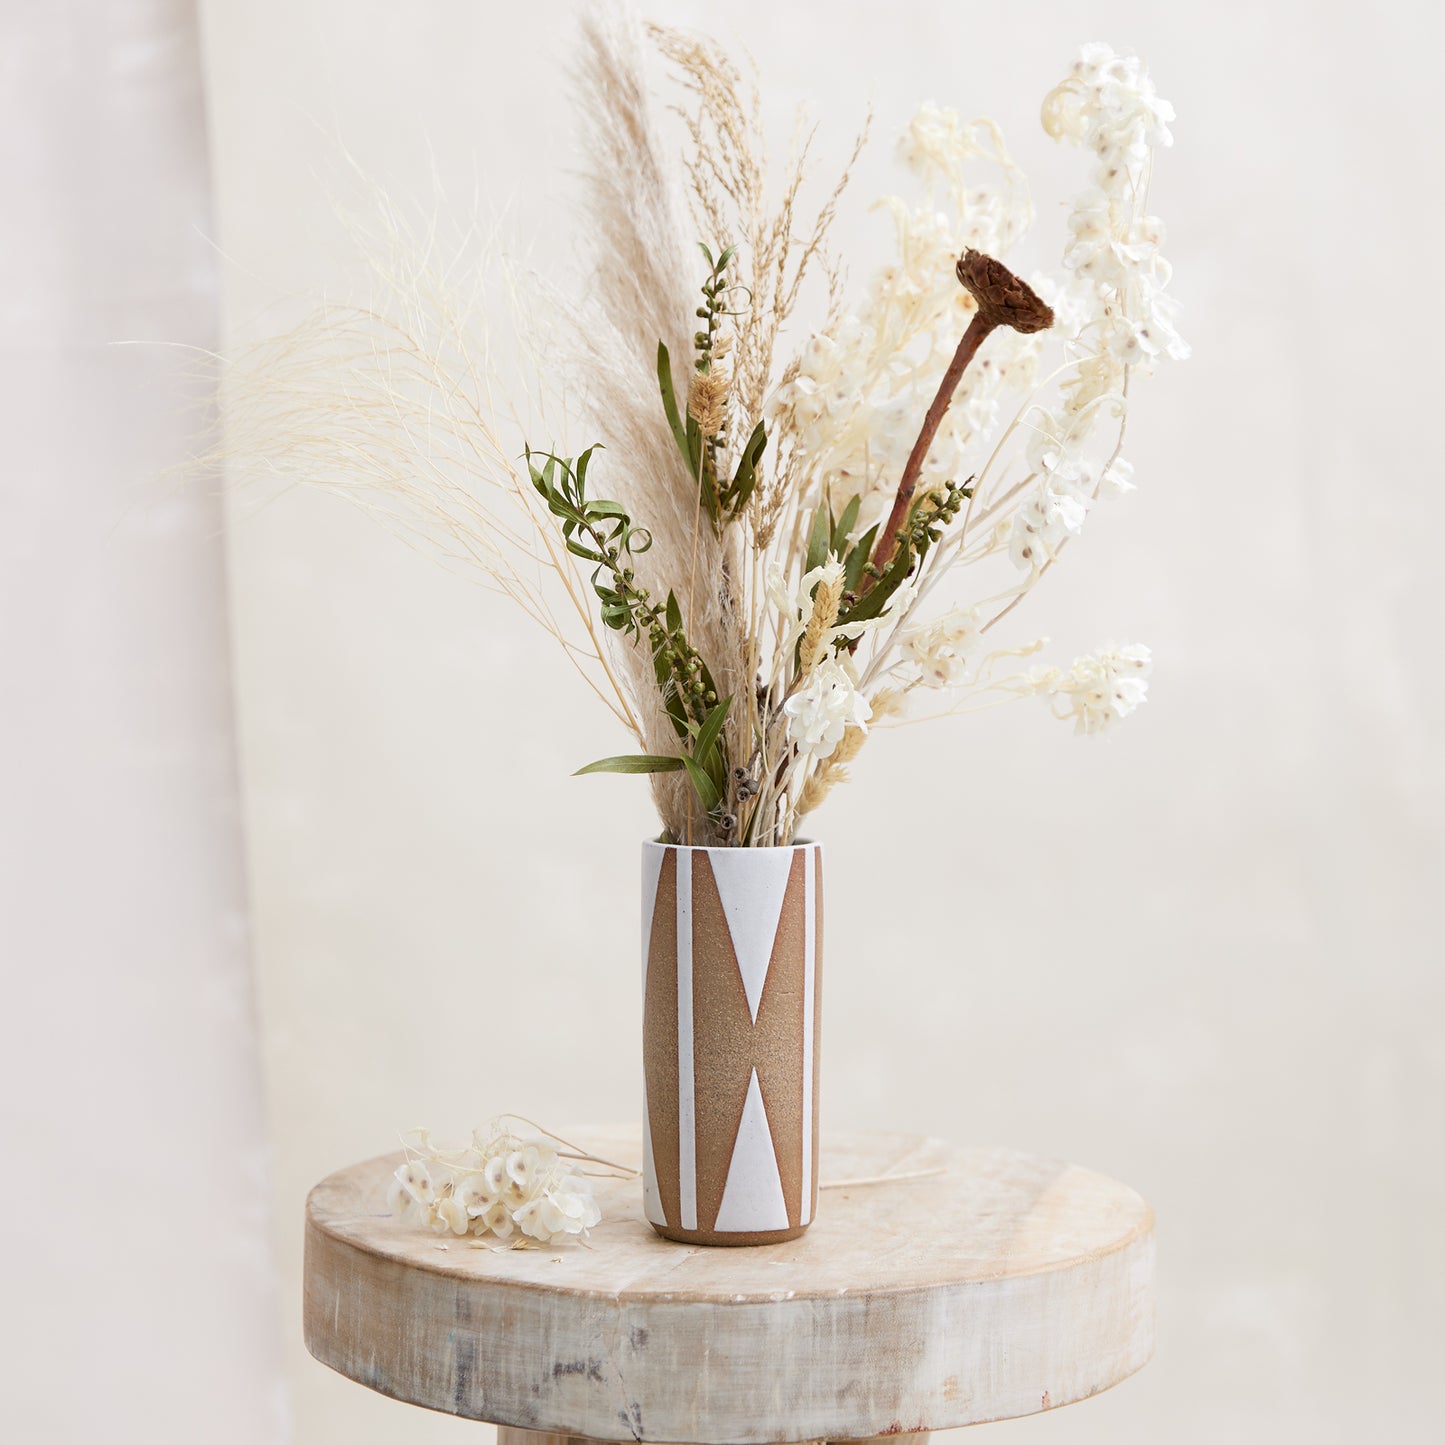 Geometric Handmade Ceramic Cylindrical Vase - Natural and White Triangle